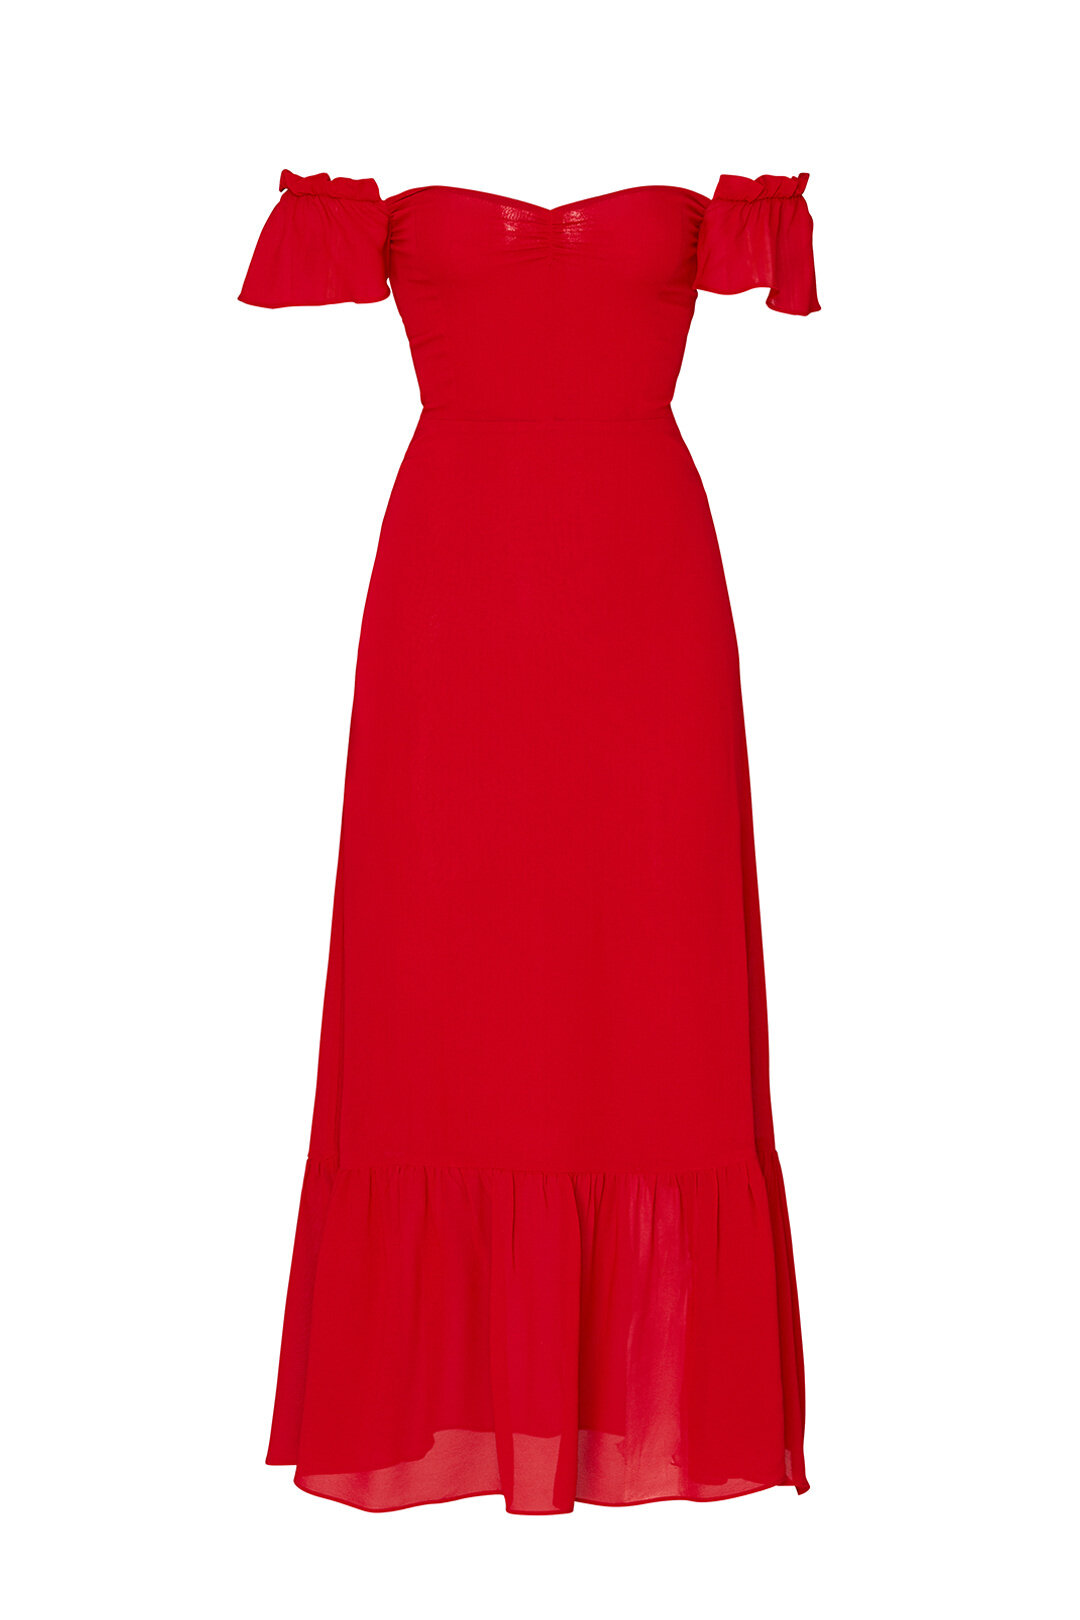 Reformation Cherry Red Dress